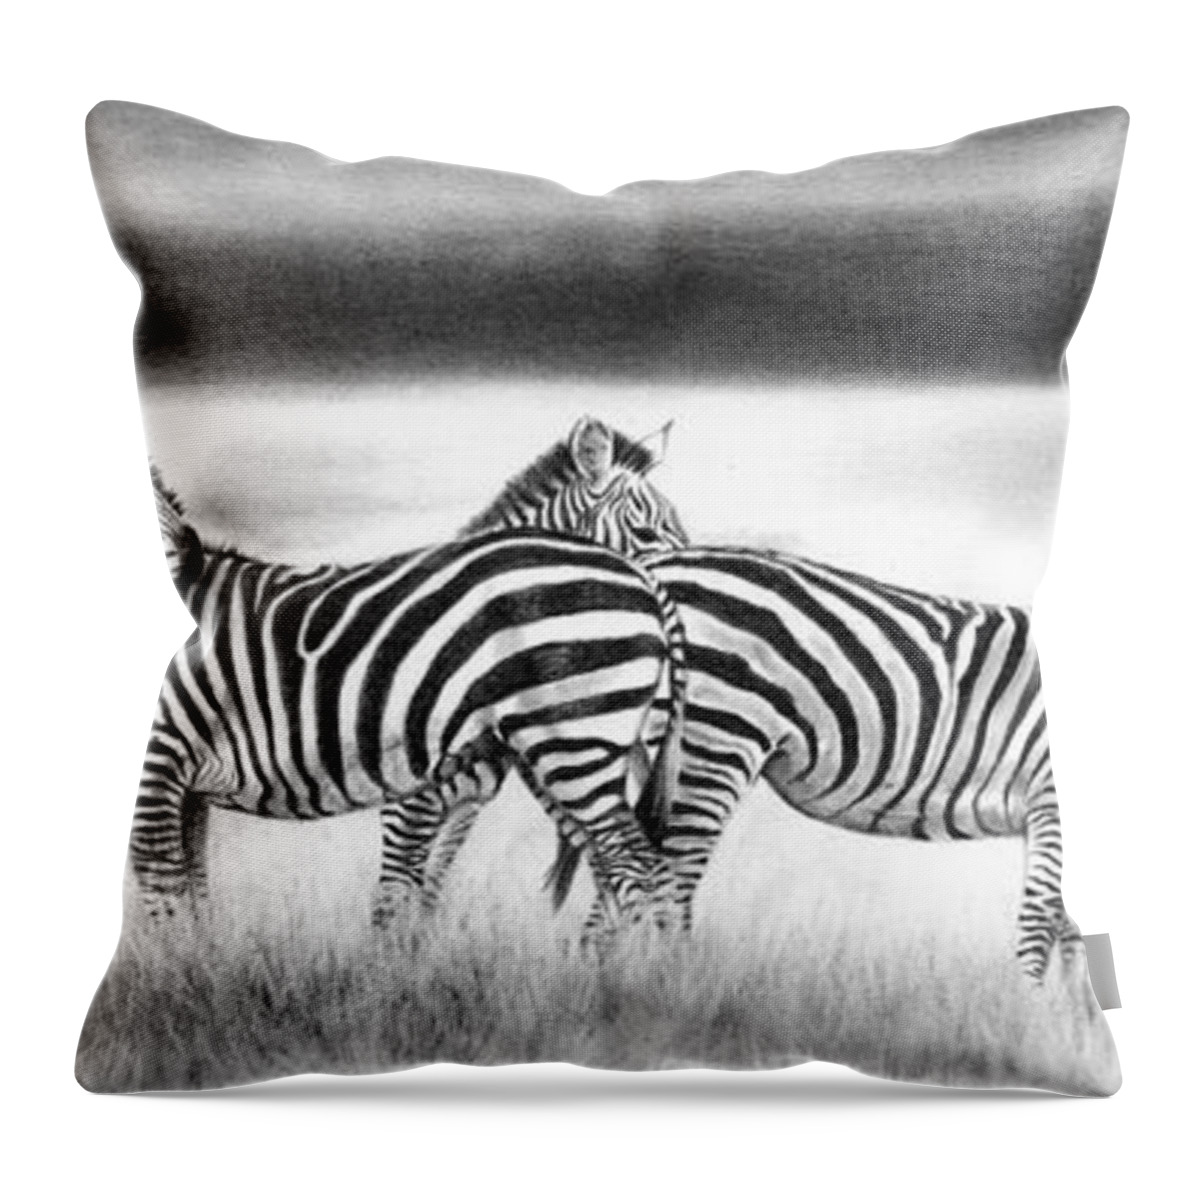 Zebra Throw Pillow featuring the drawing Zebra Panarama by Peter Williams